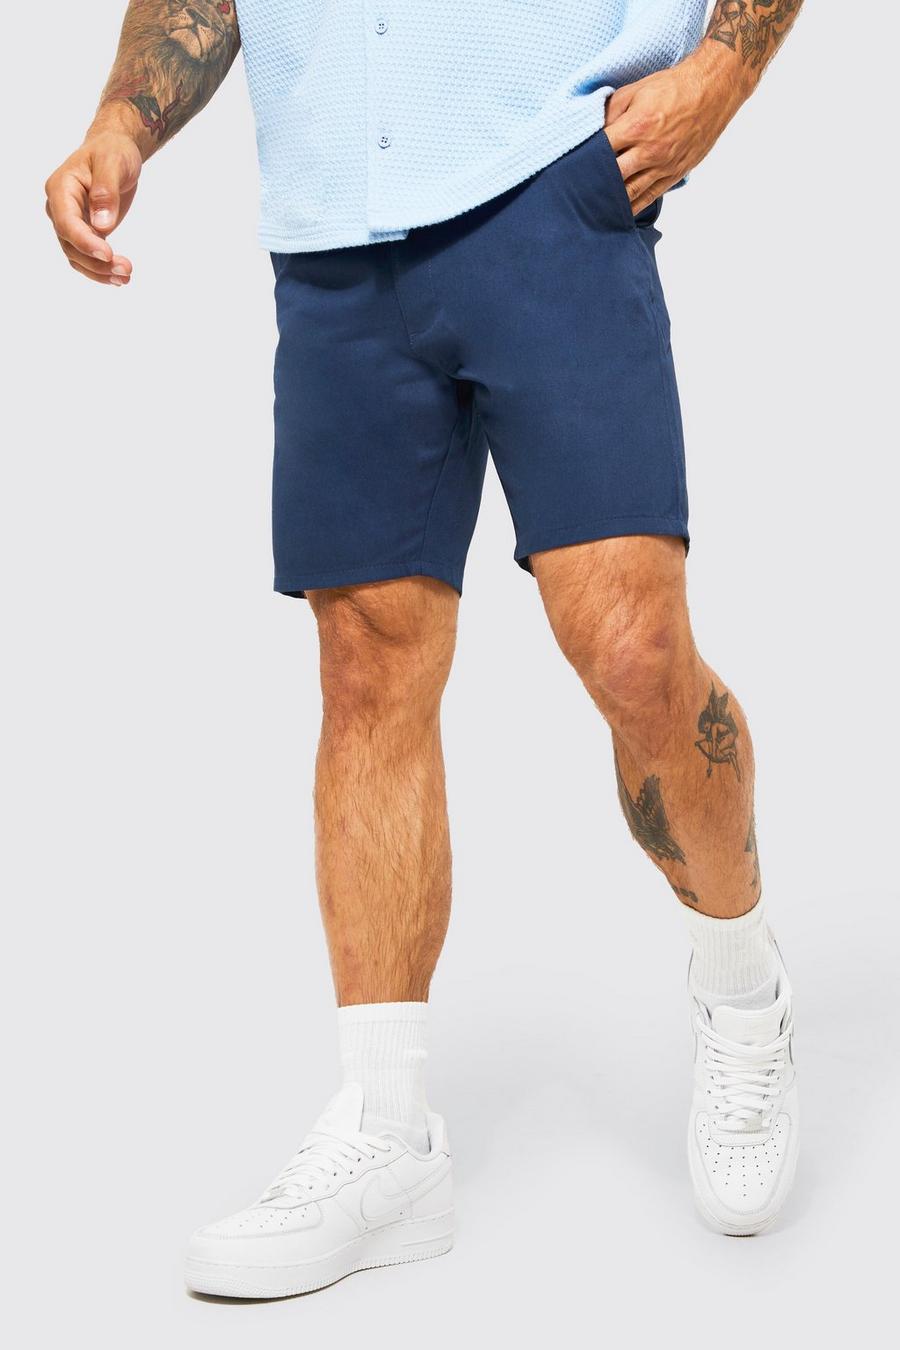 Pantaloncini Chino Skinny Fit, Navy azul marino